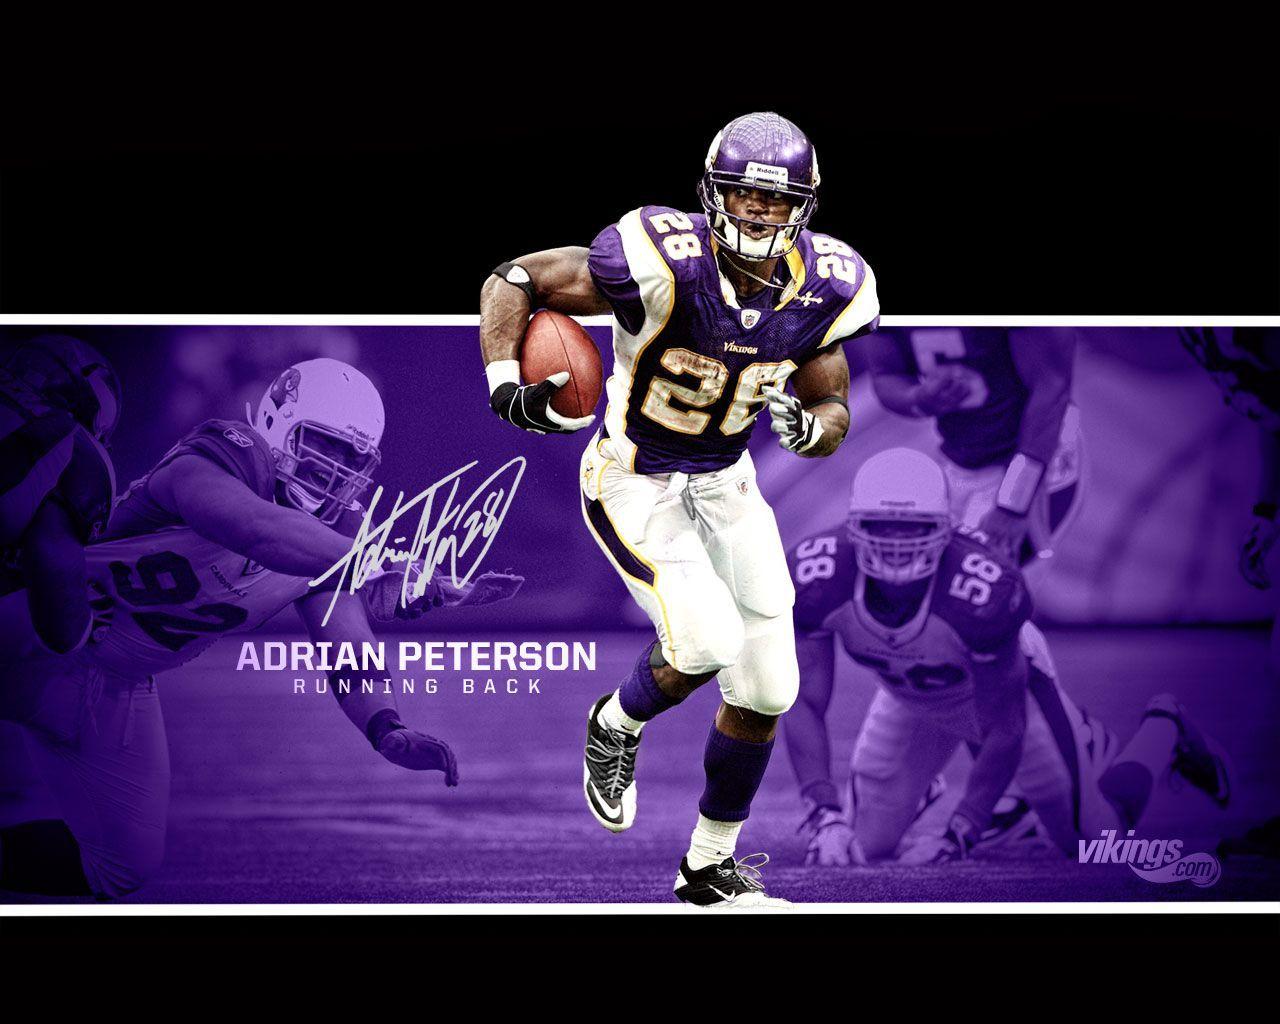 Minnesota Vikings Player Adrian Peterson Wallpaper. Download